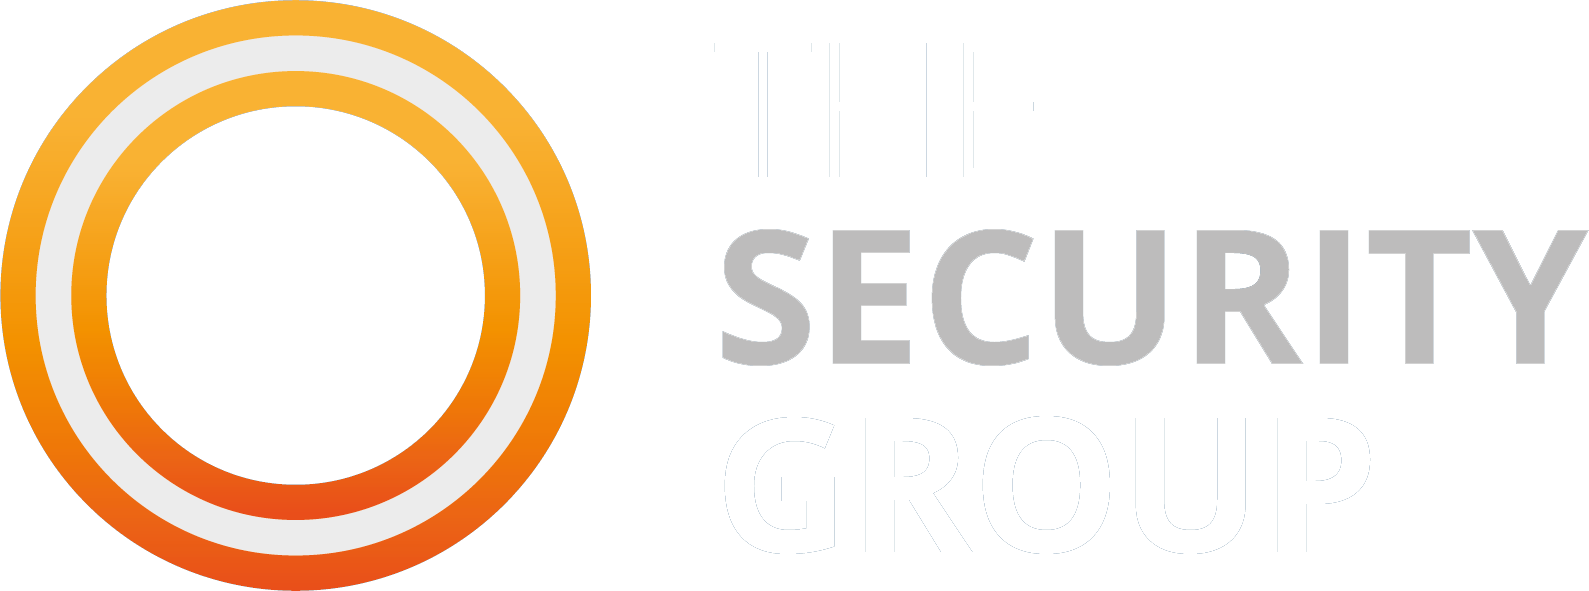 The Enterprise Security Centre Group